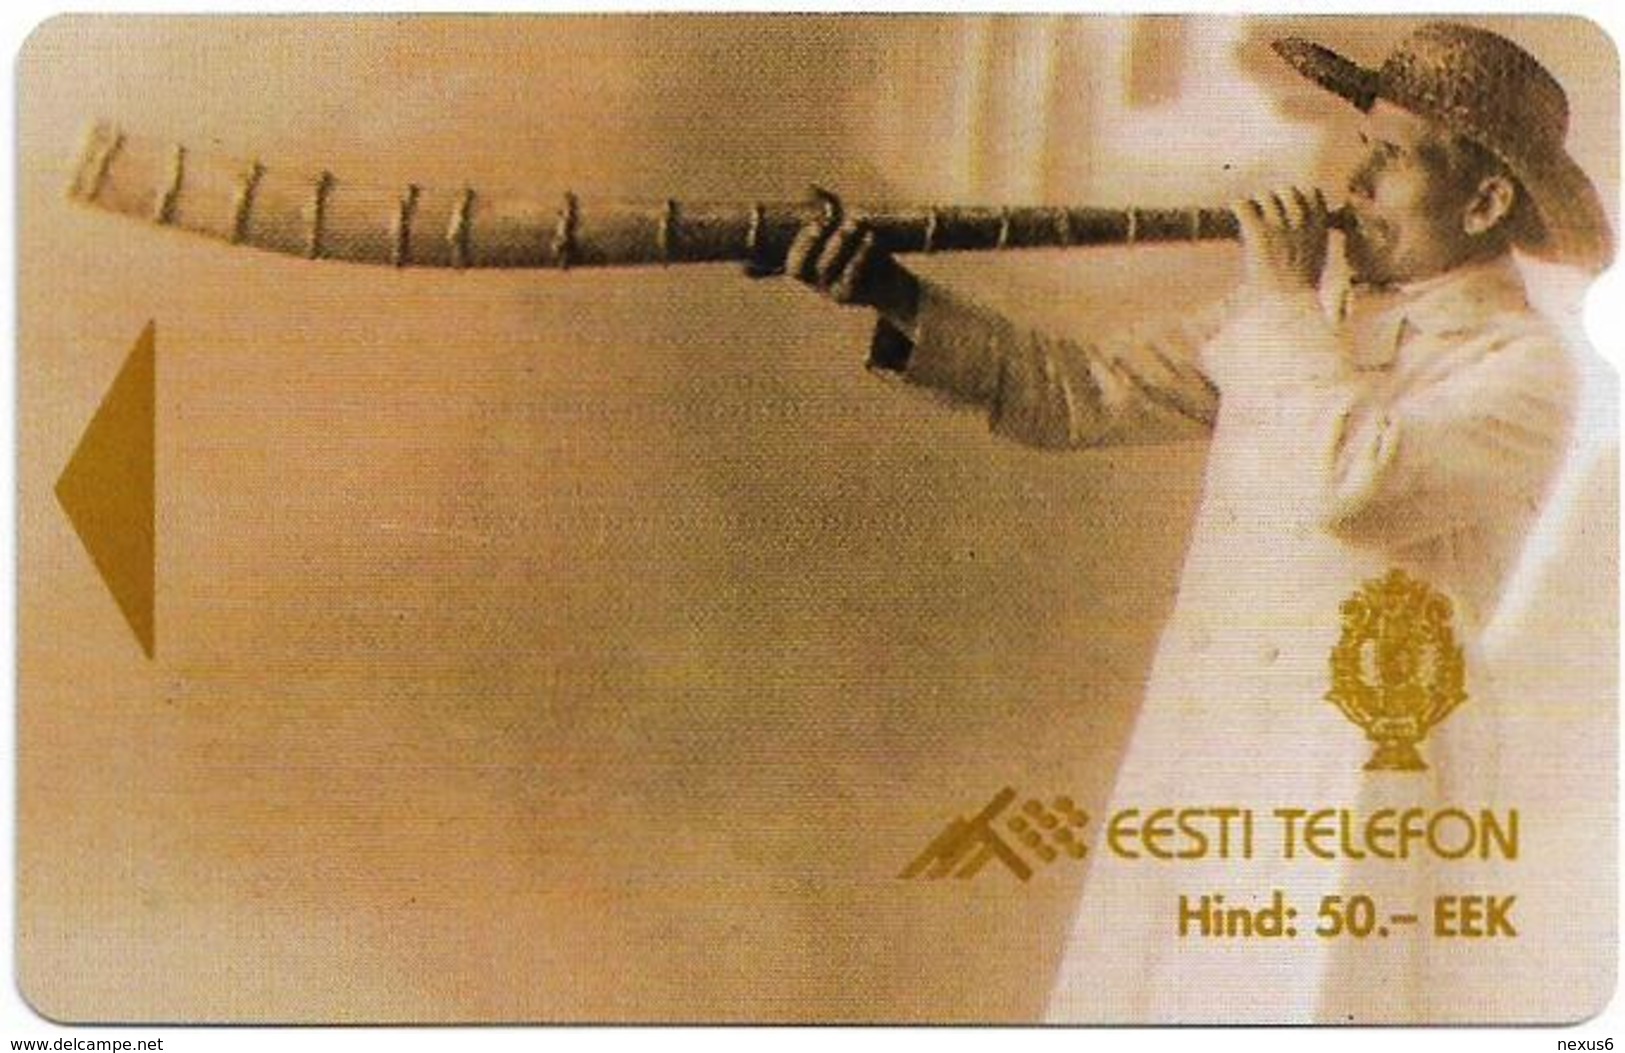 Estonia - Eesti Telefon - Alcatel - Hornplayer - ET0019 - 1994, 30.000ex, Used - Estonia